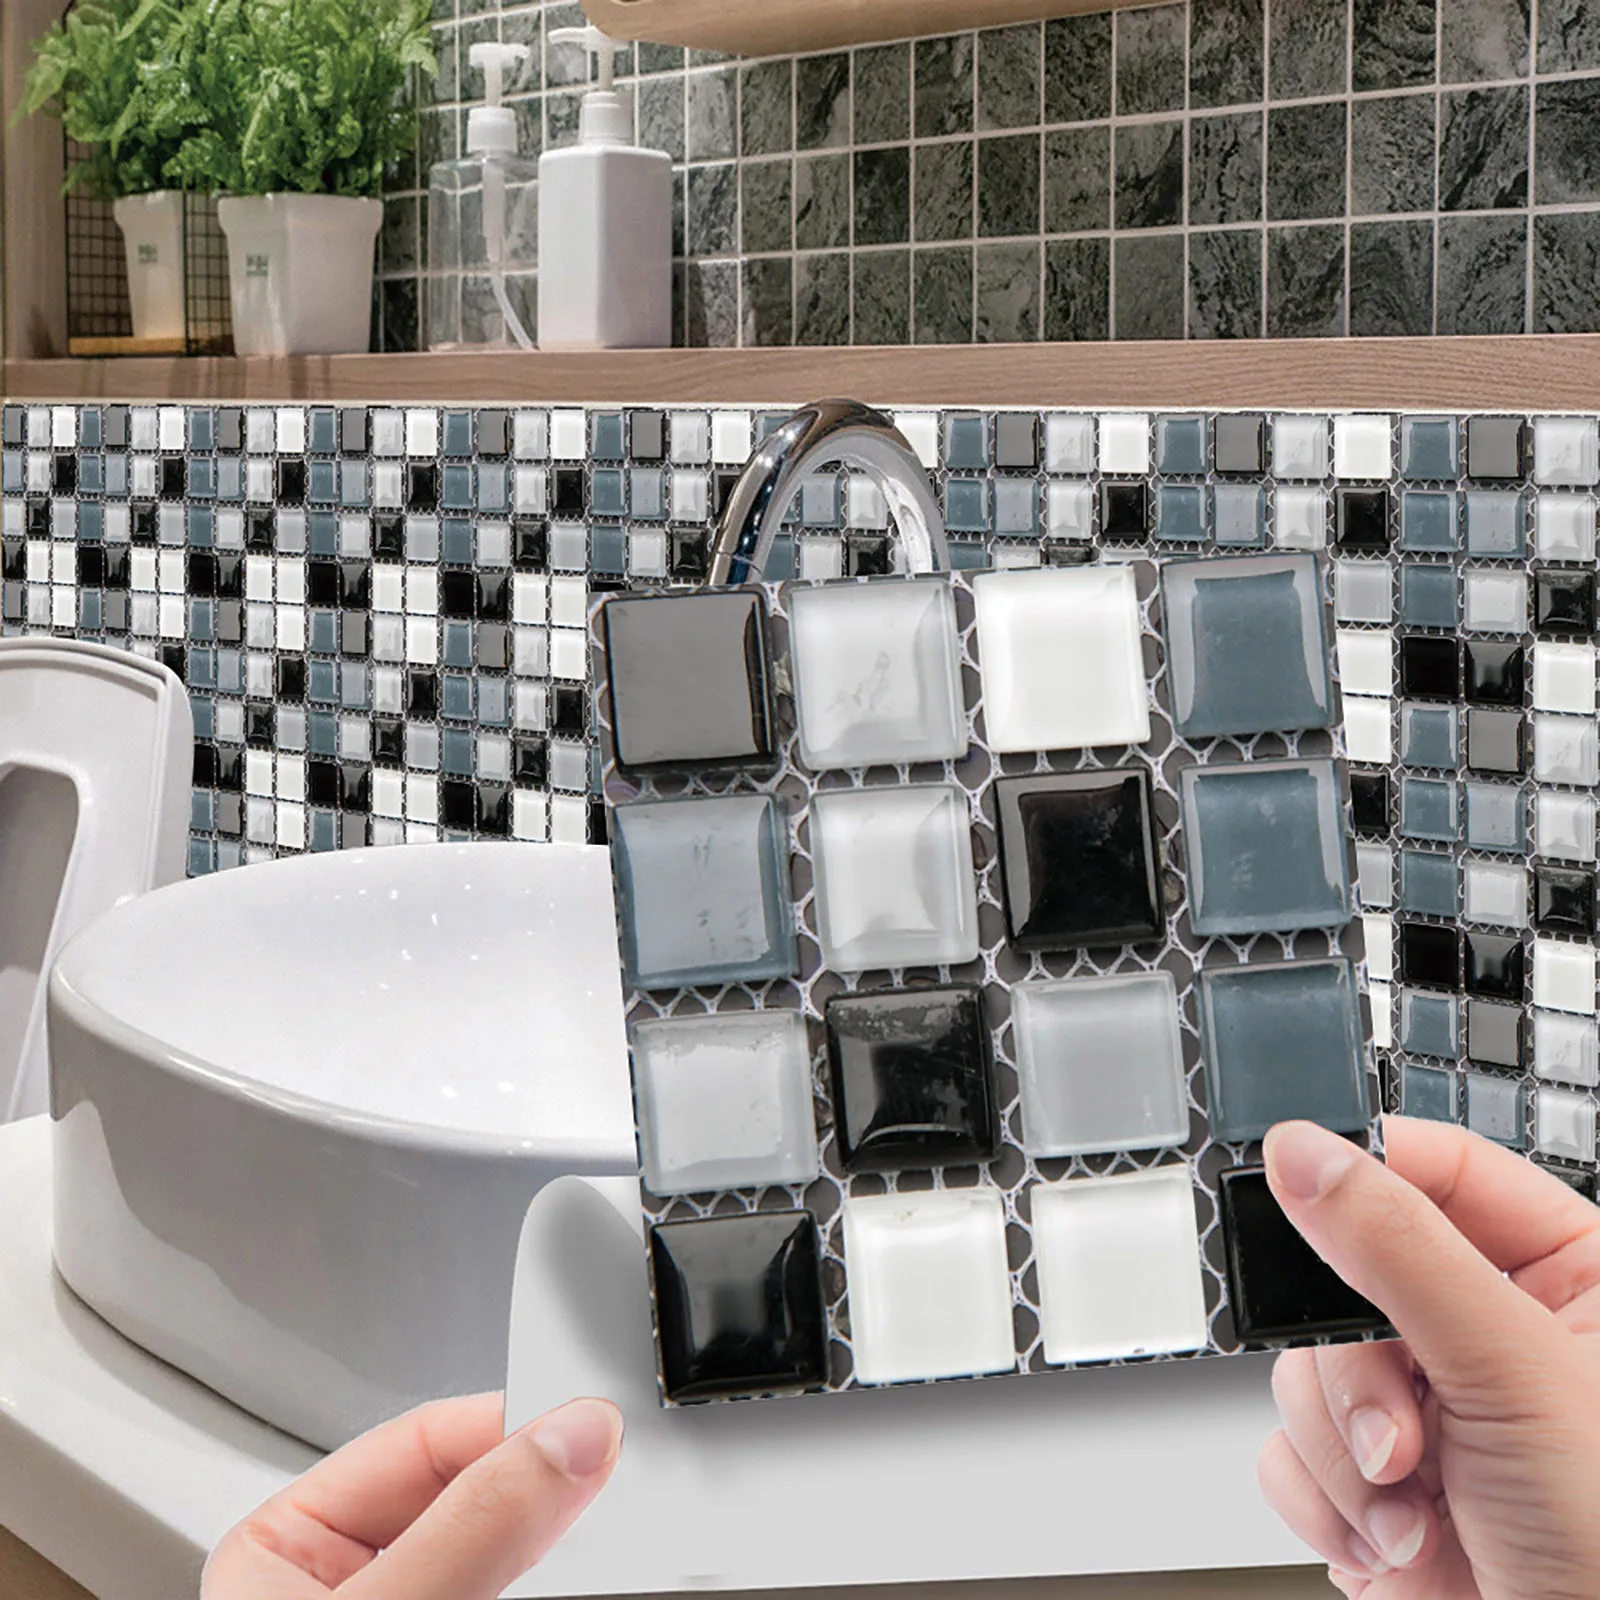 3D Self Adhesive Wall Sticker Tile Sticker Decal Kitchen Bathroom Home Decor DIY 